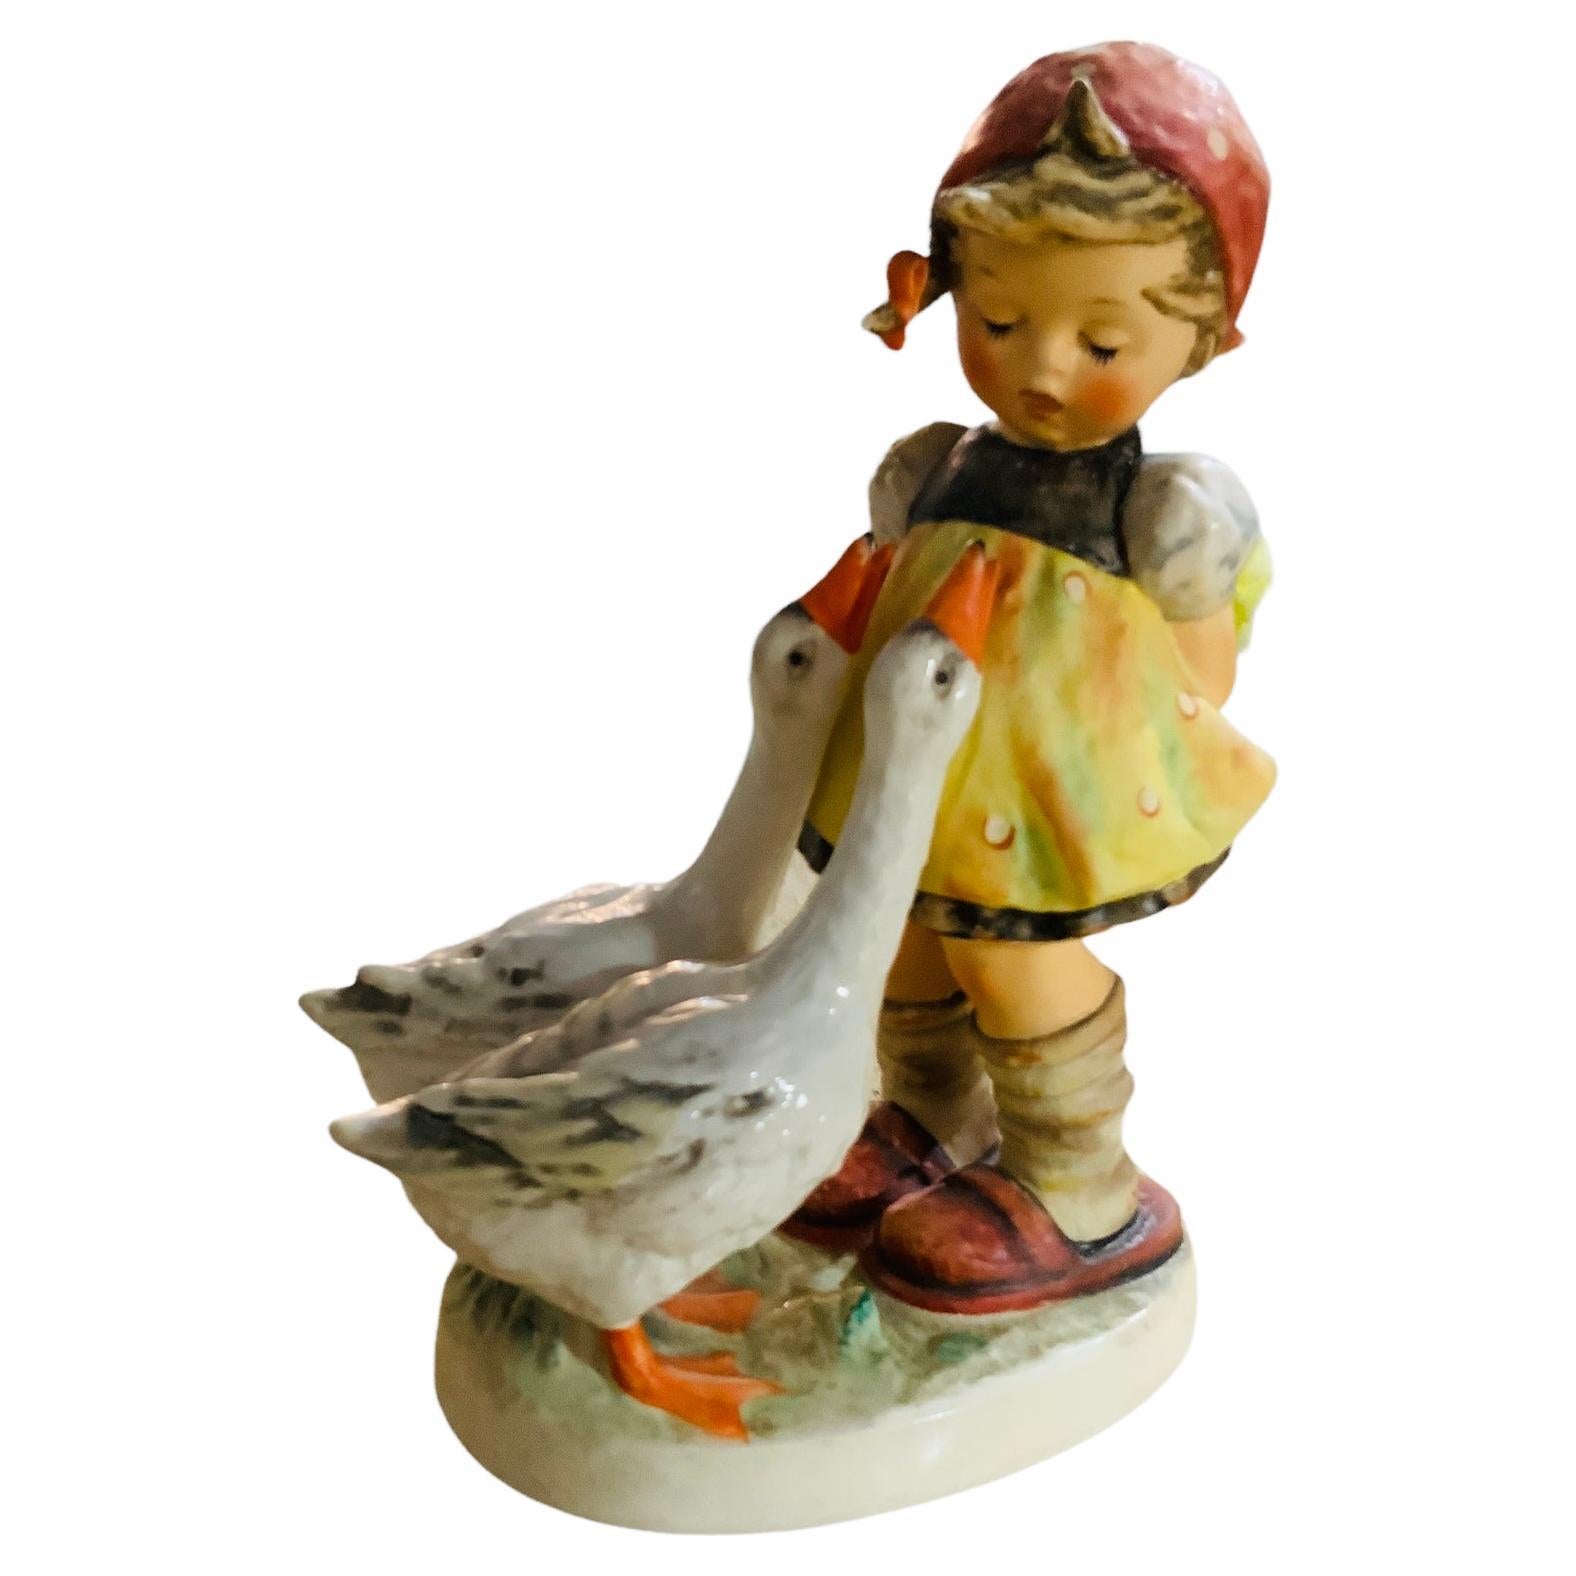 Goebel Company Hummel-Porzellanfigur eines Gänseblümchens